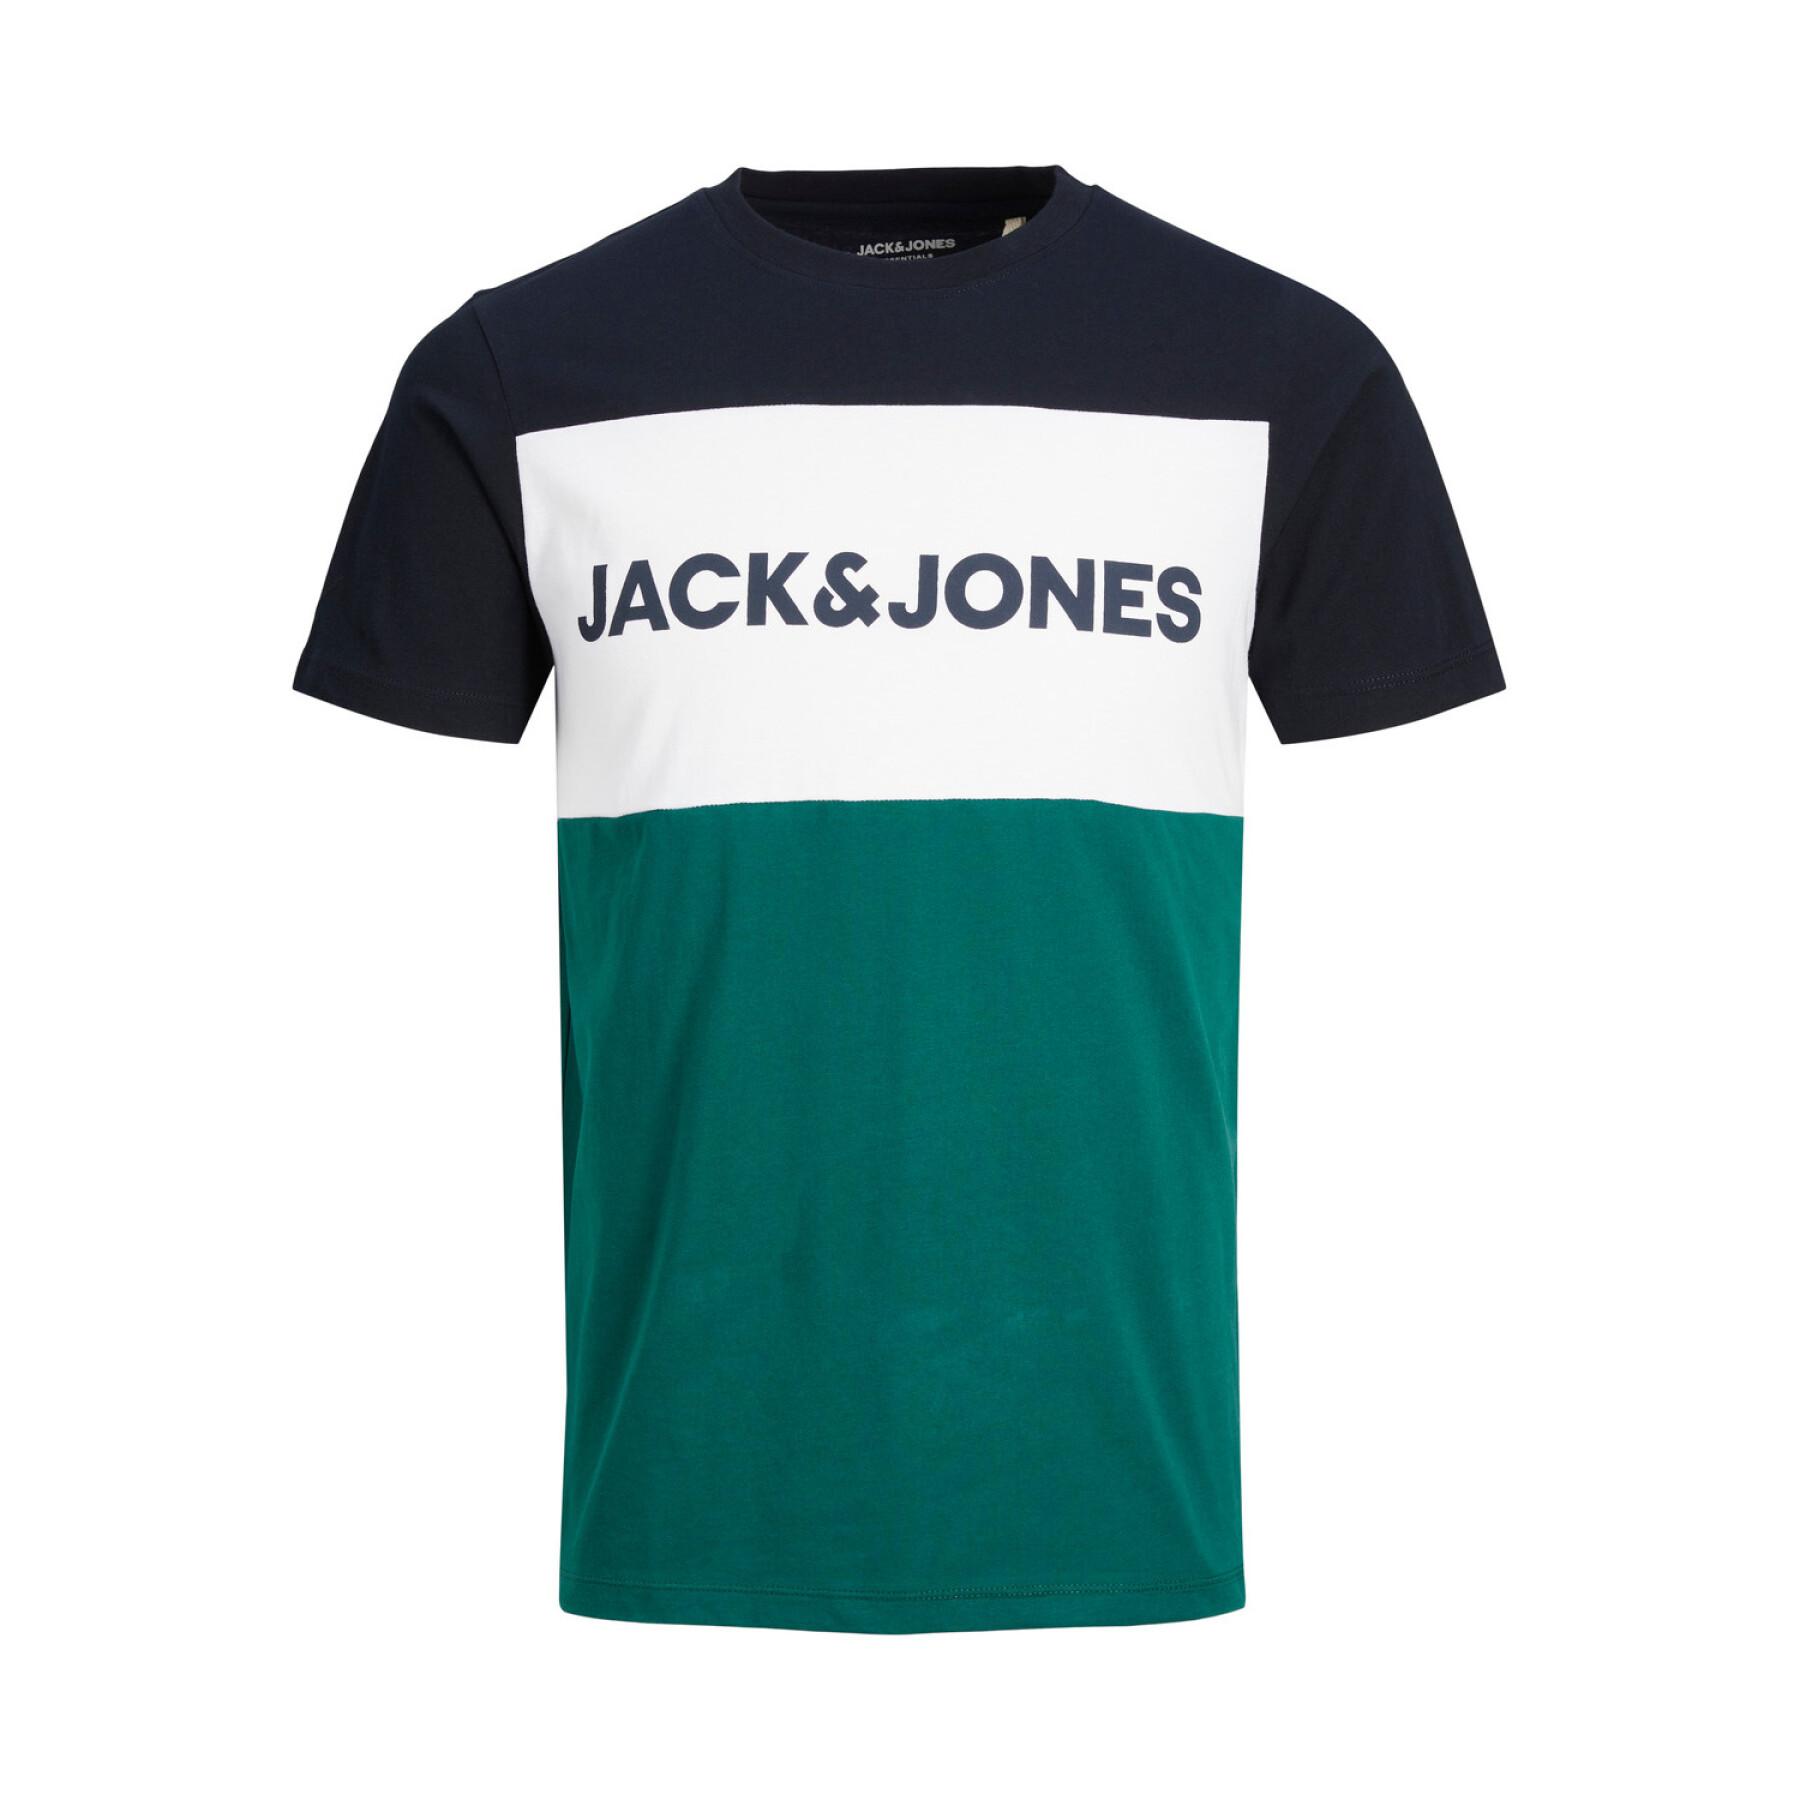 Koszulka Jack & Jones Logo Blocking